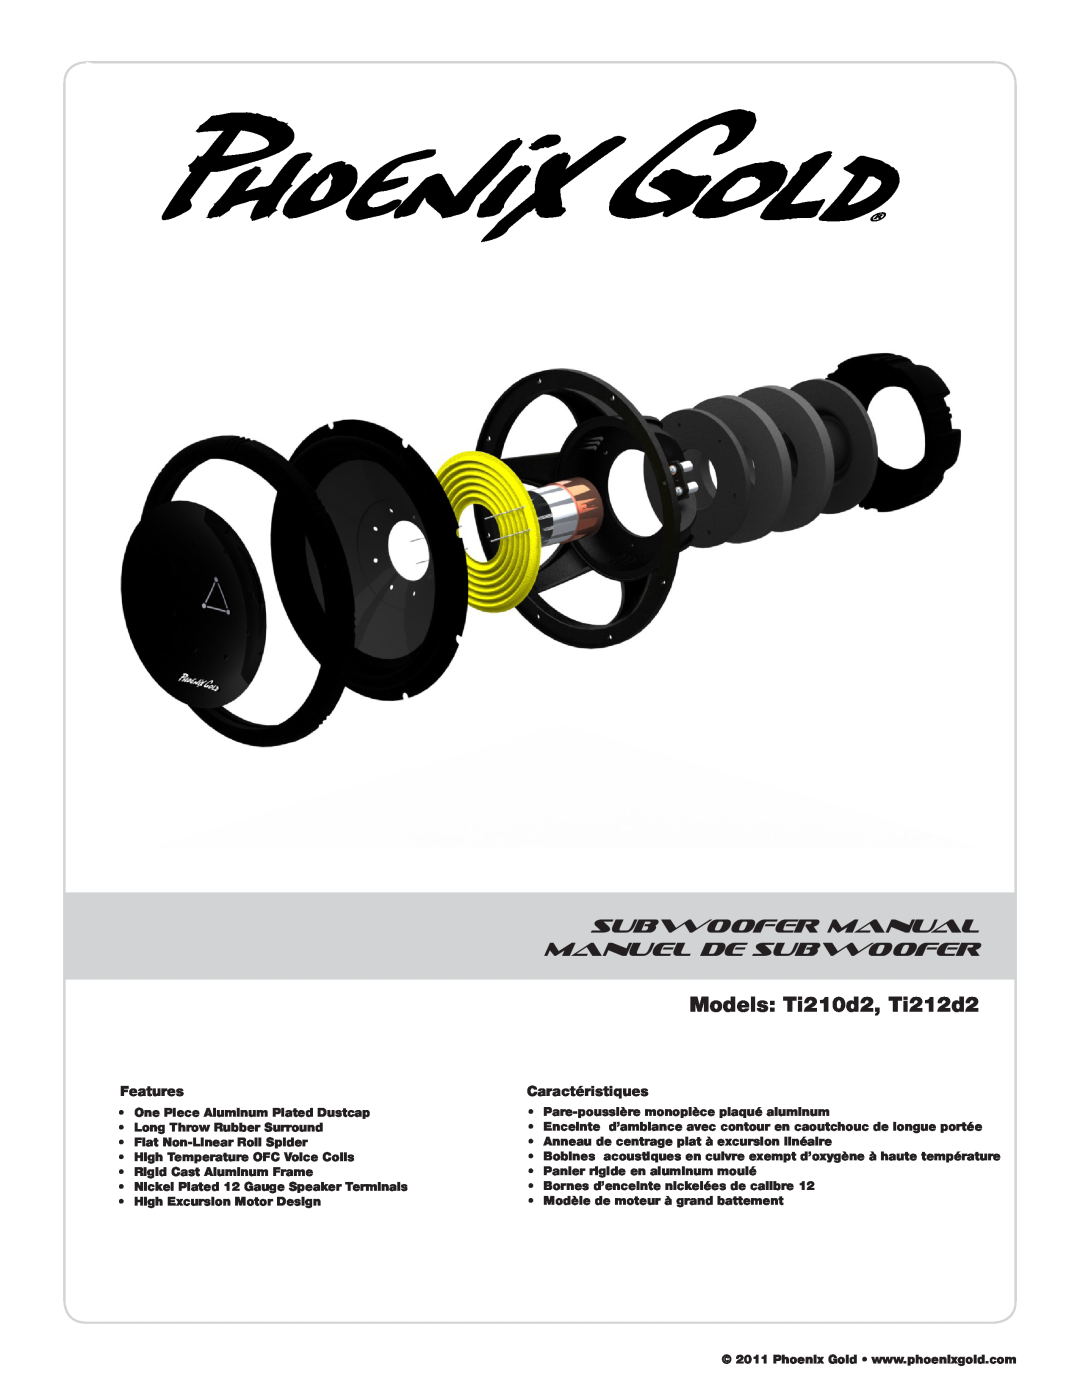 Phoenix Gold TI210D2 manual Subwoofer Manual, Models Ti210d2, Ti212d2, Manuel De Subwoofer, Features, Caractéristiques 